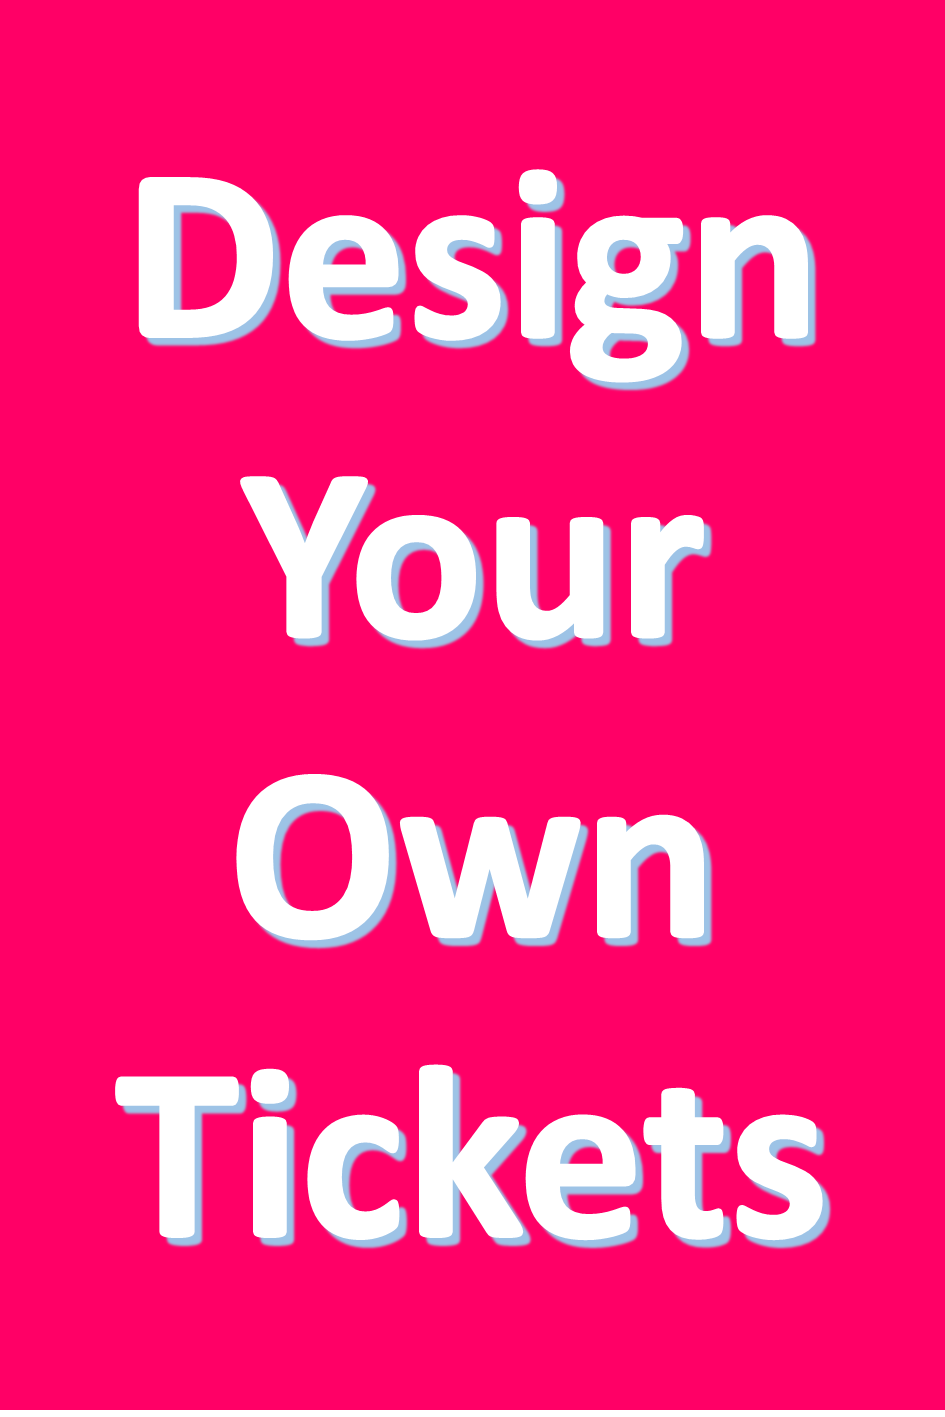 tambola-ticket-pdf-12-tickets-per-page-400-unique-tickets-housie-ticket